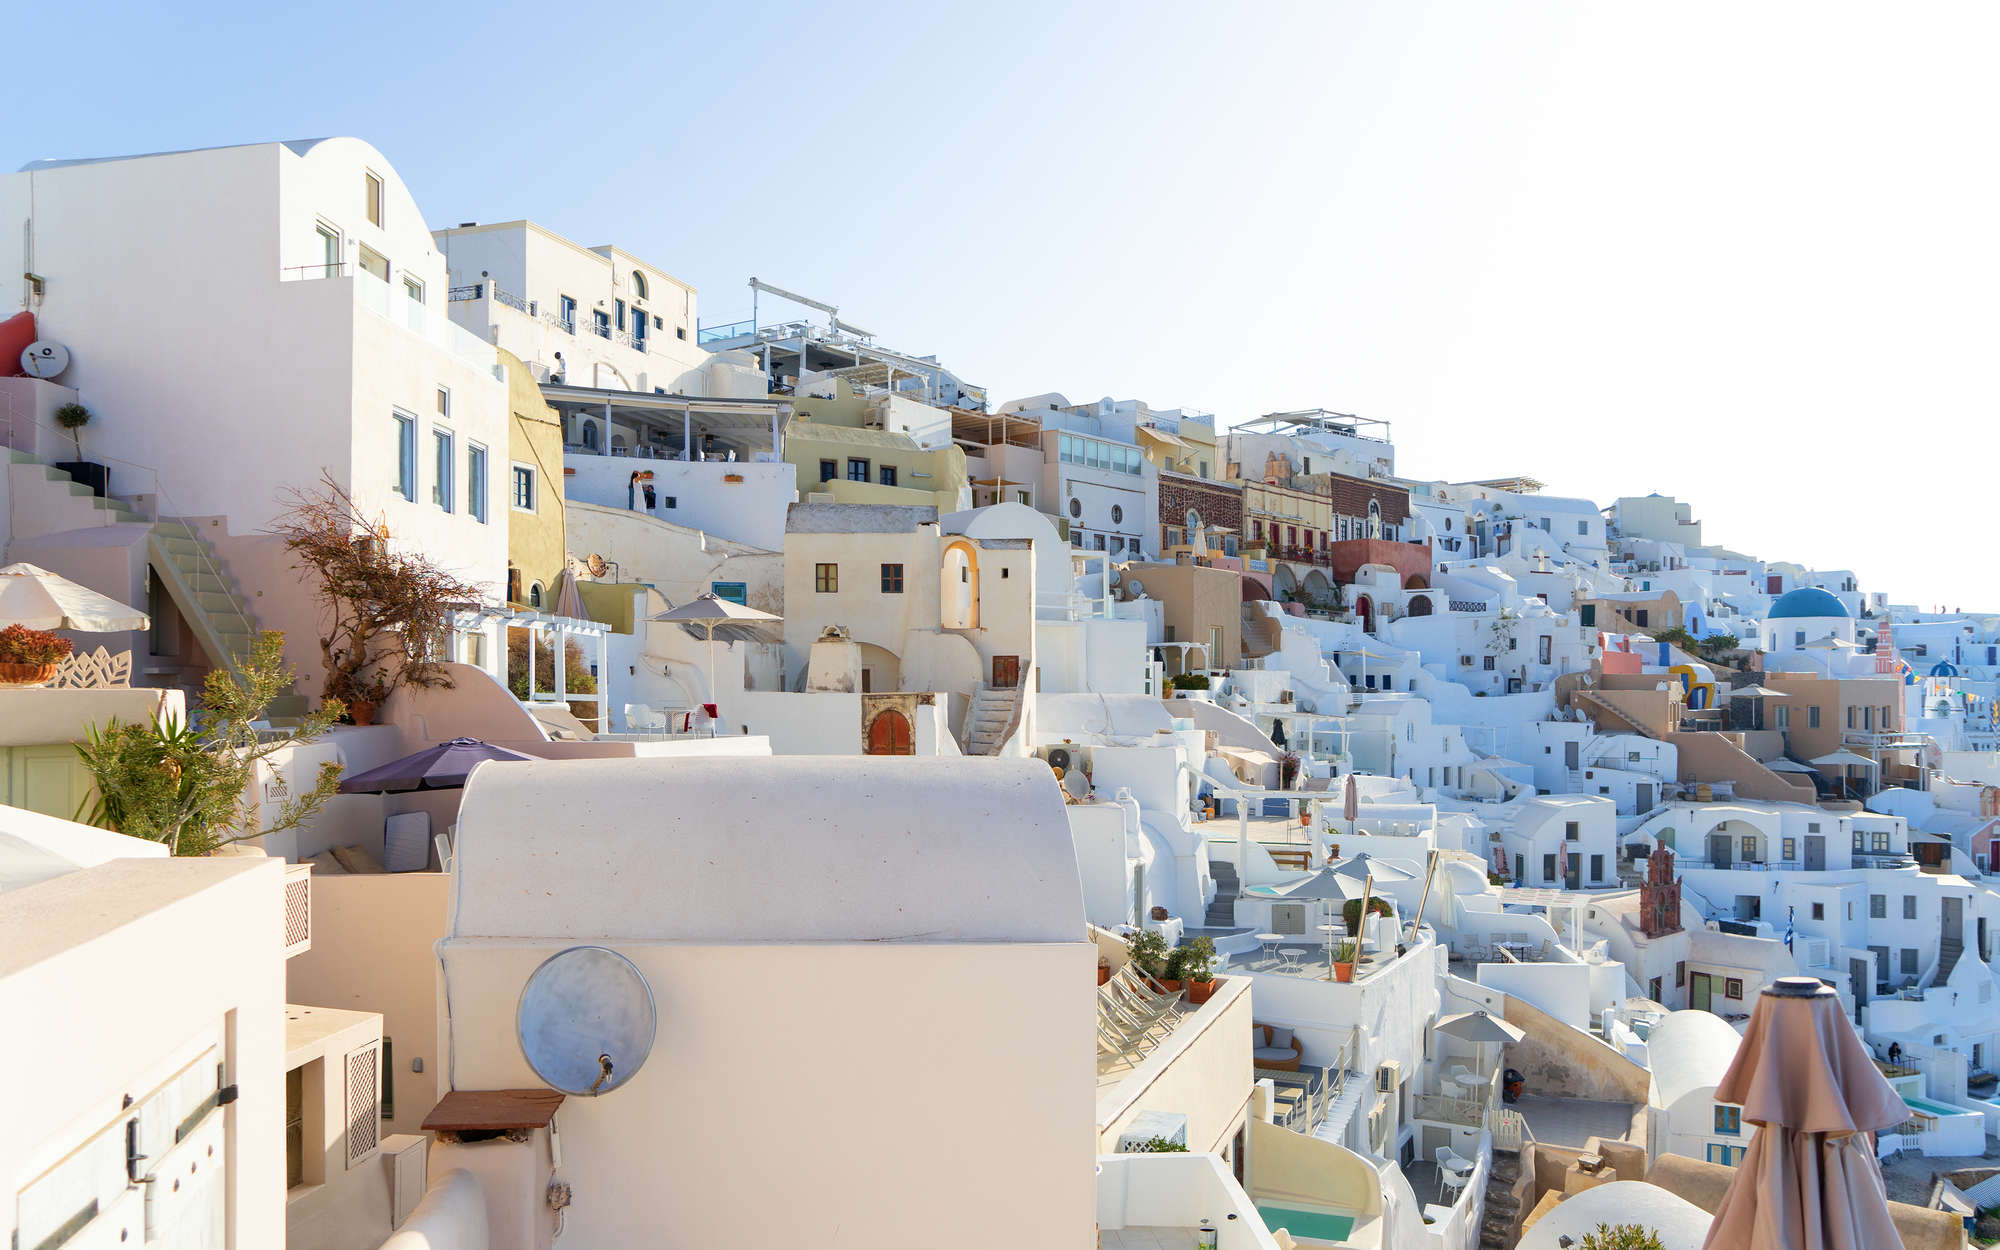             Fototapete Santorini in der Mittagssonne – Perlmutt Glattvlies
        